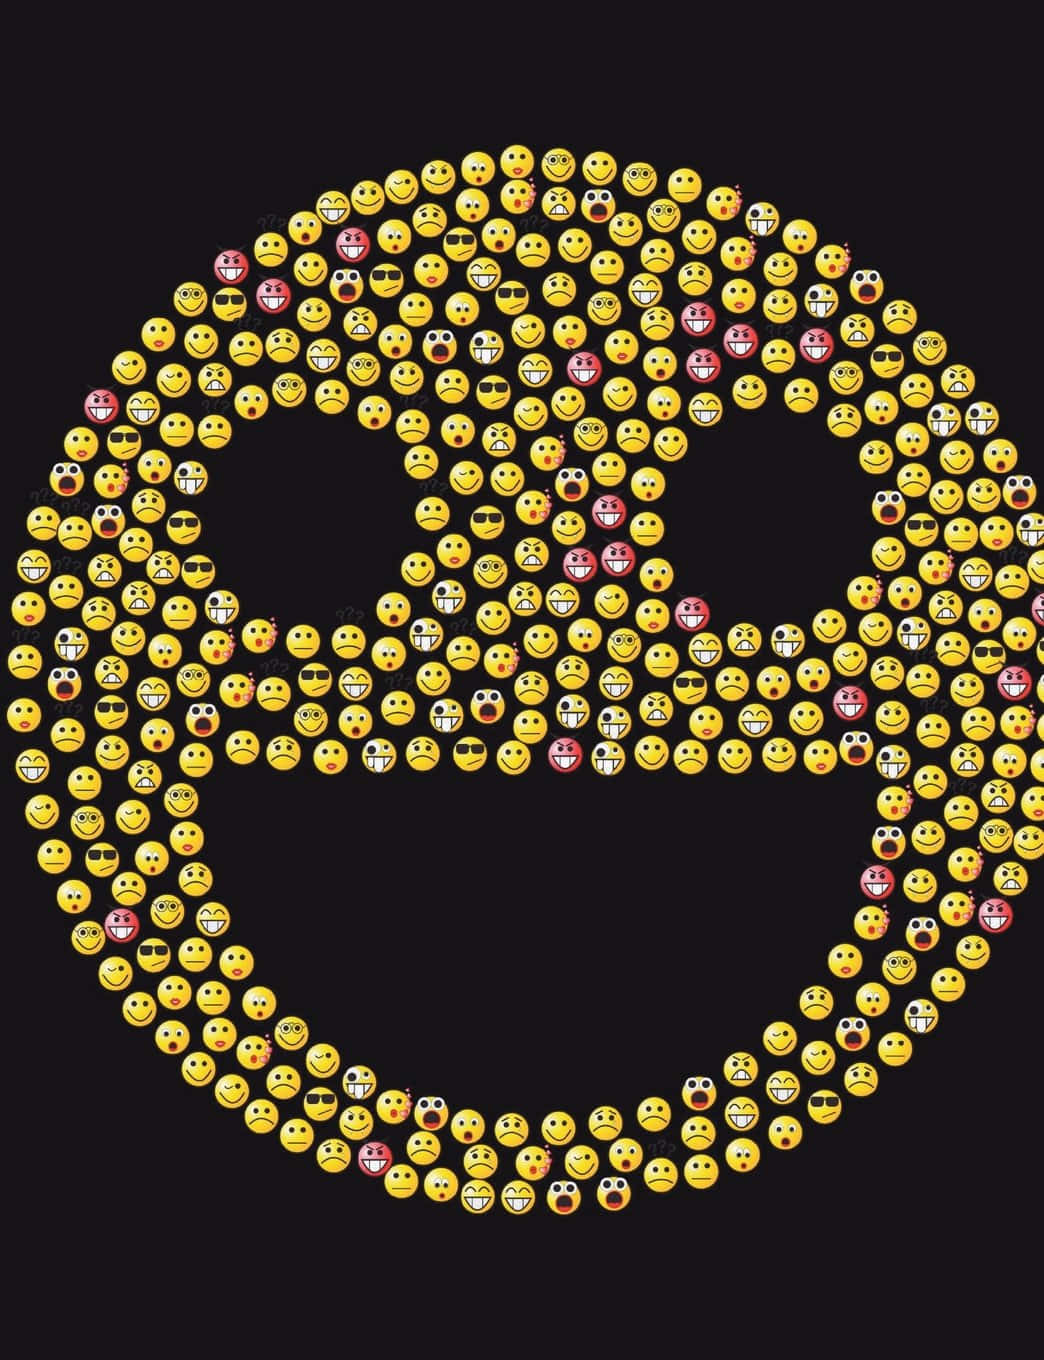 Free Black Smile Wallpaper Downloads, [100+] Black Smile Wallpapers for  FREE 